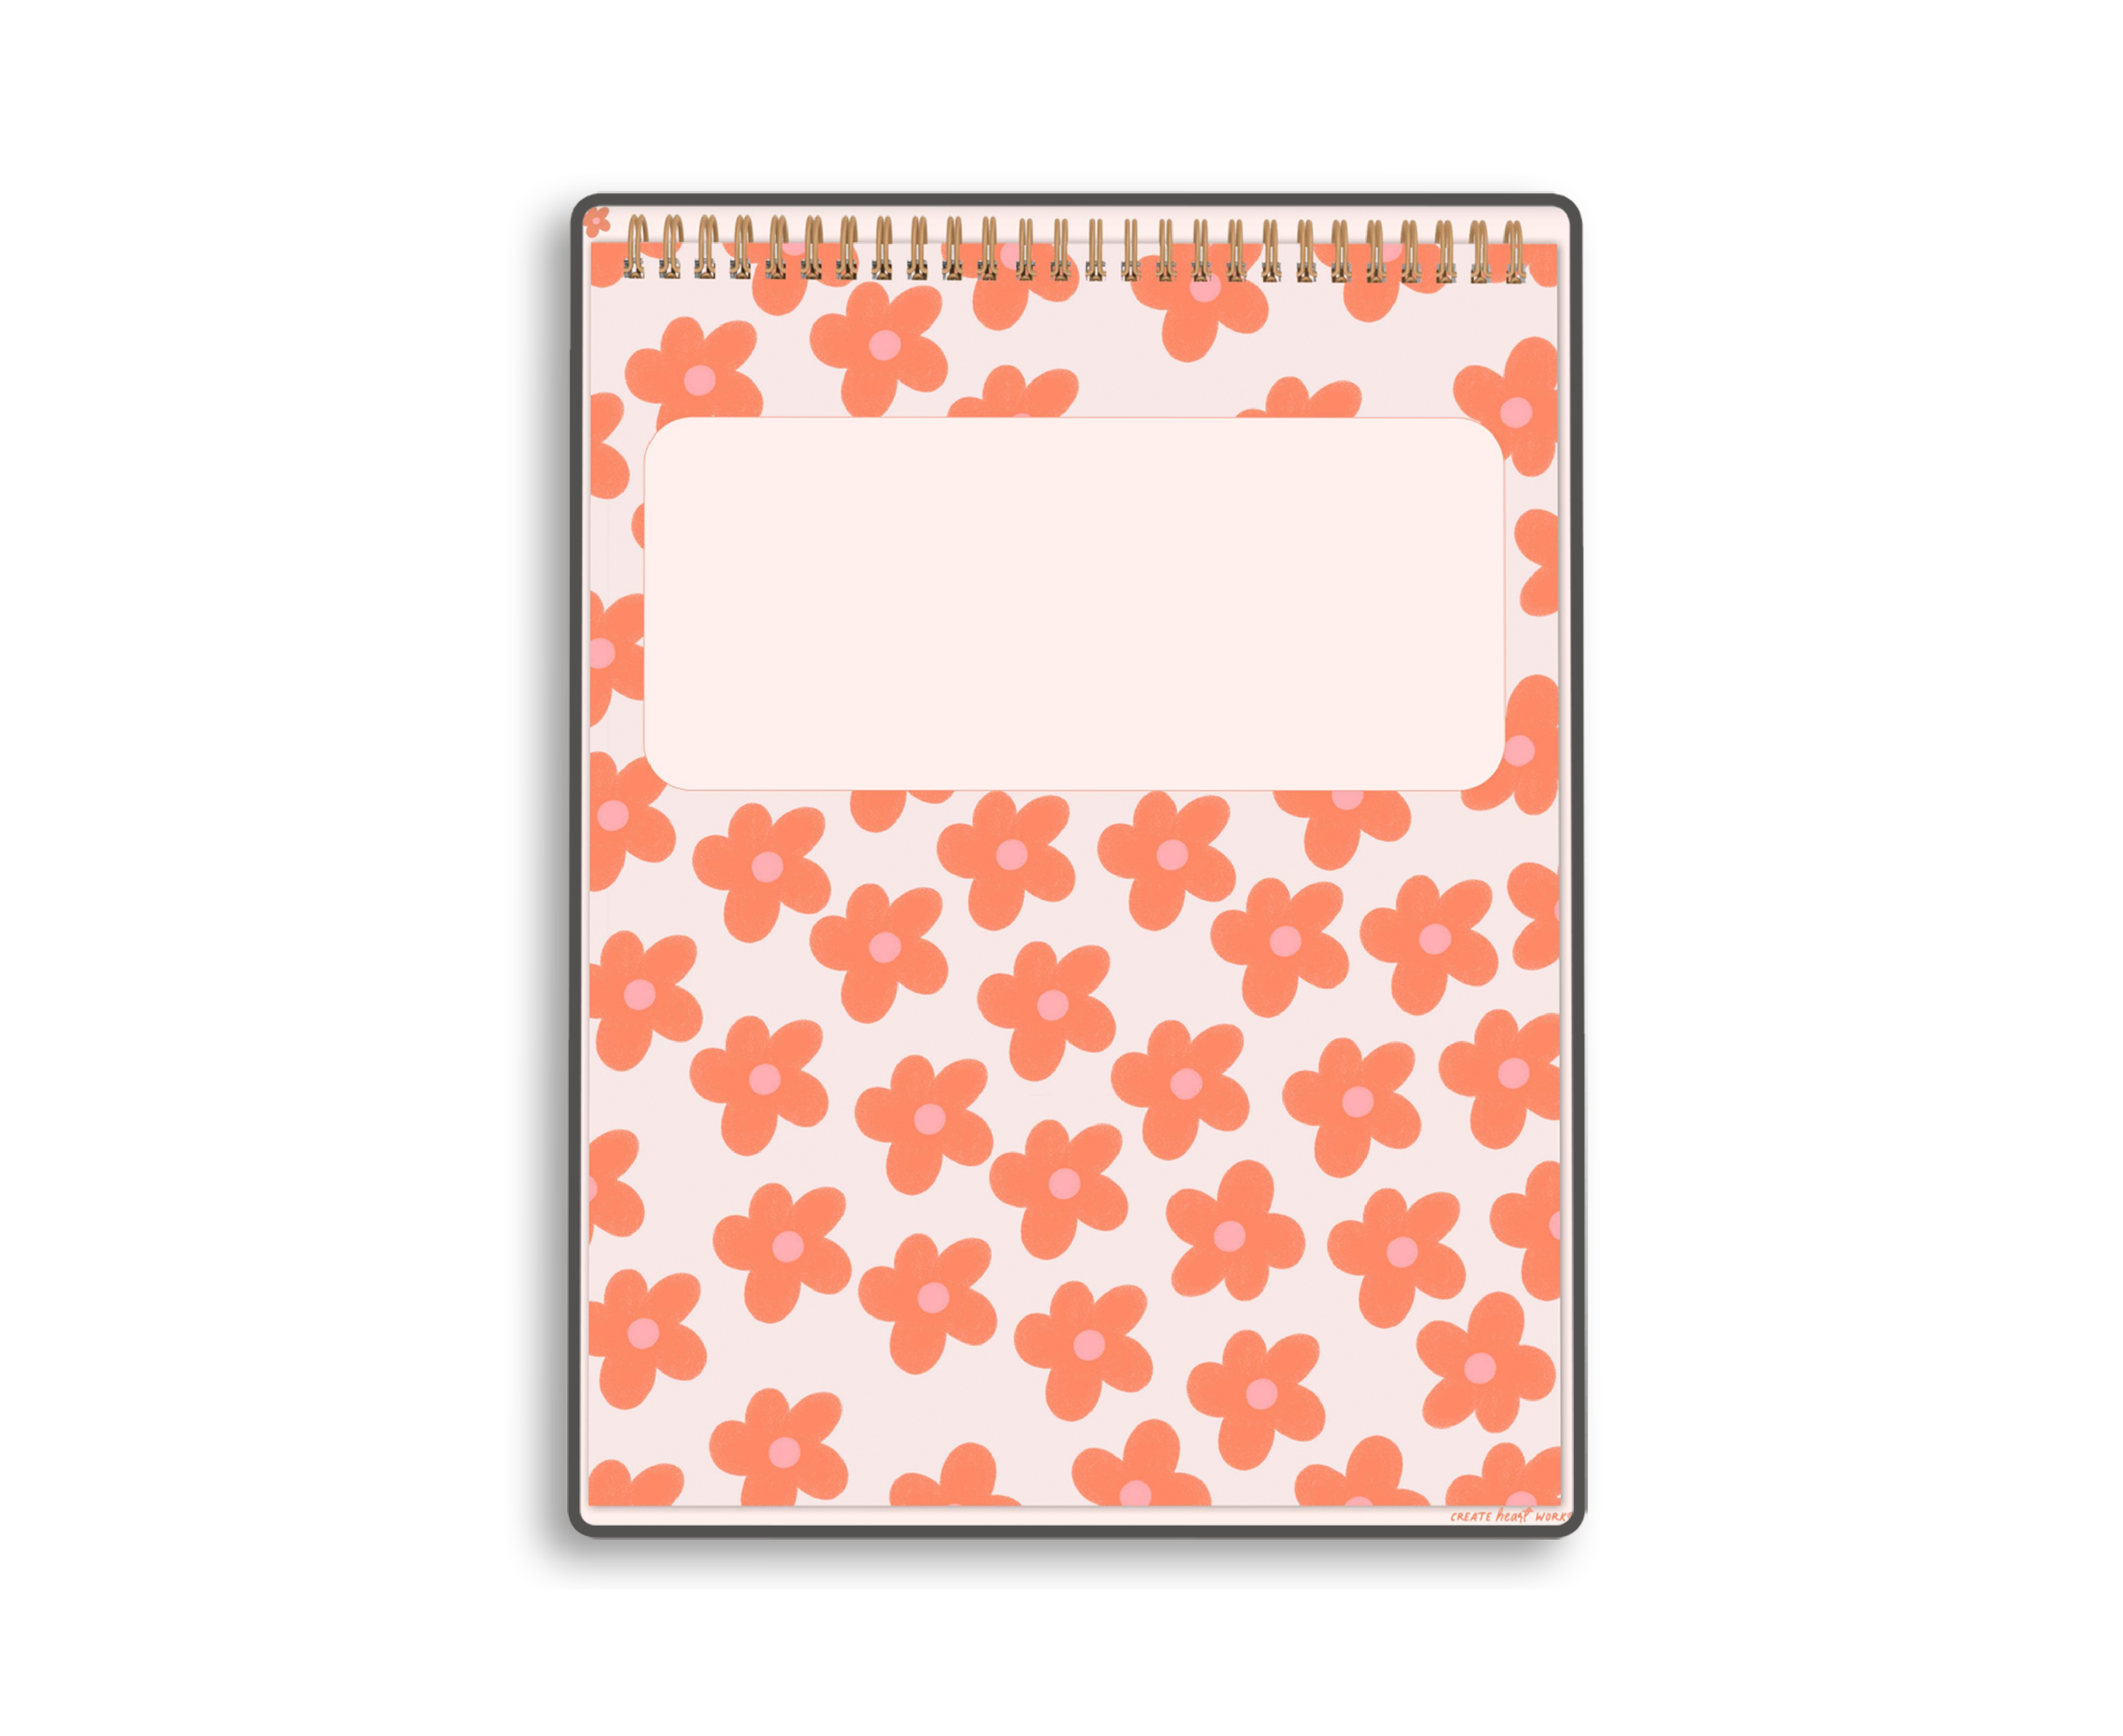 Everyday Notepad